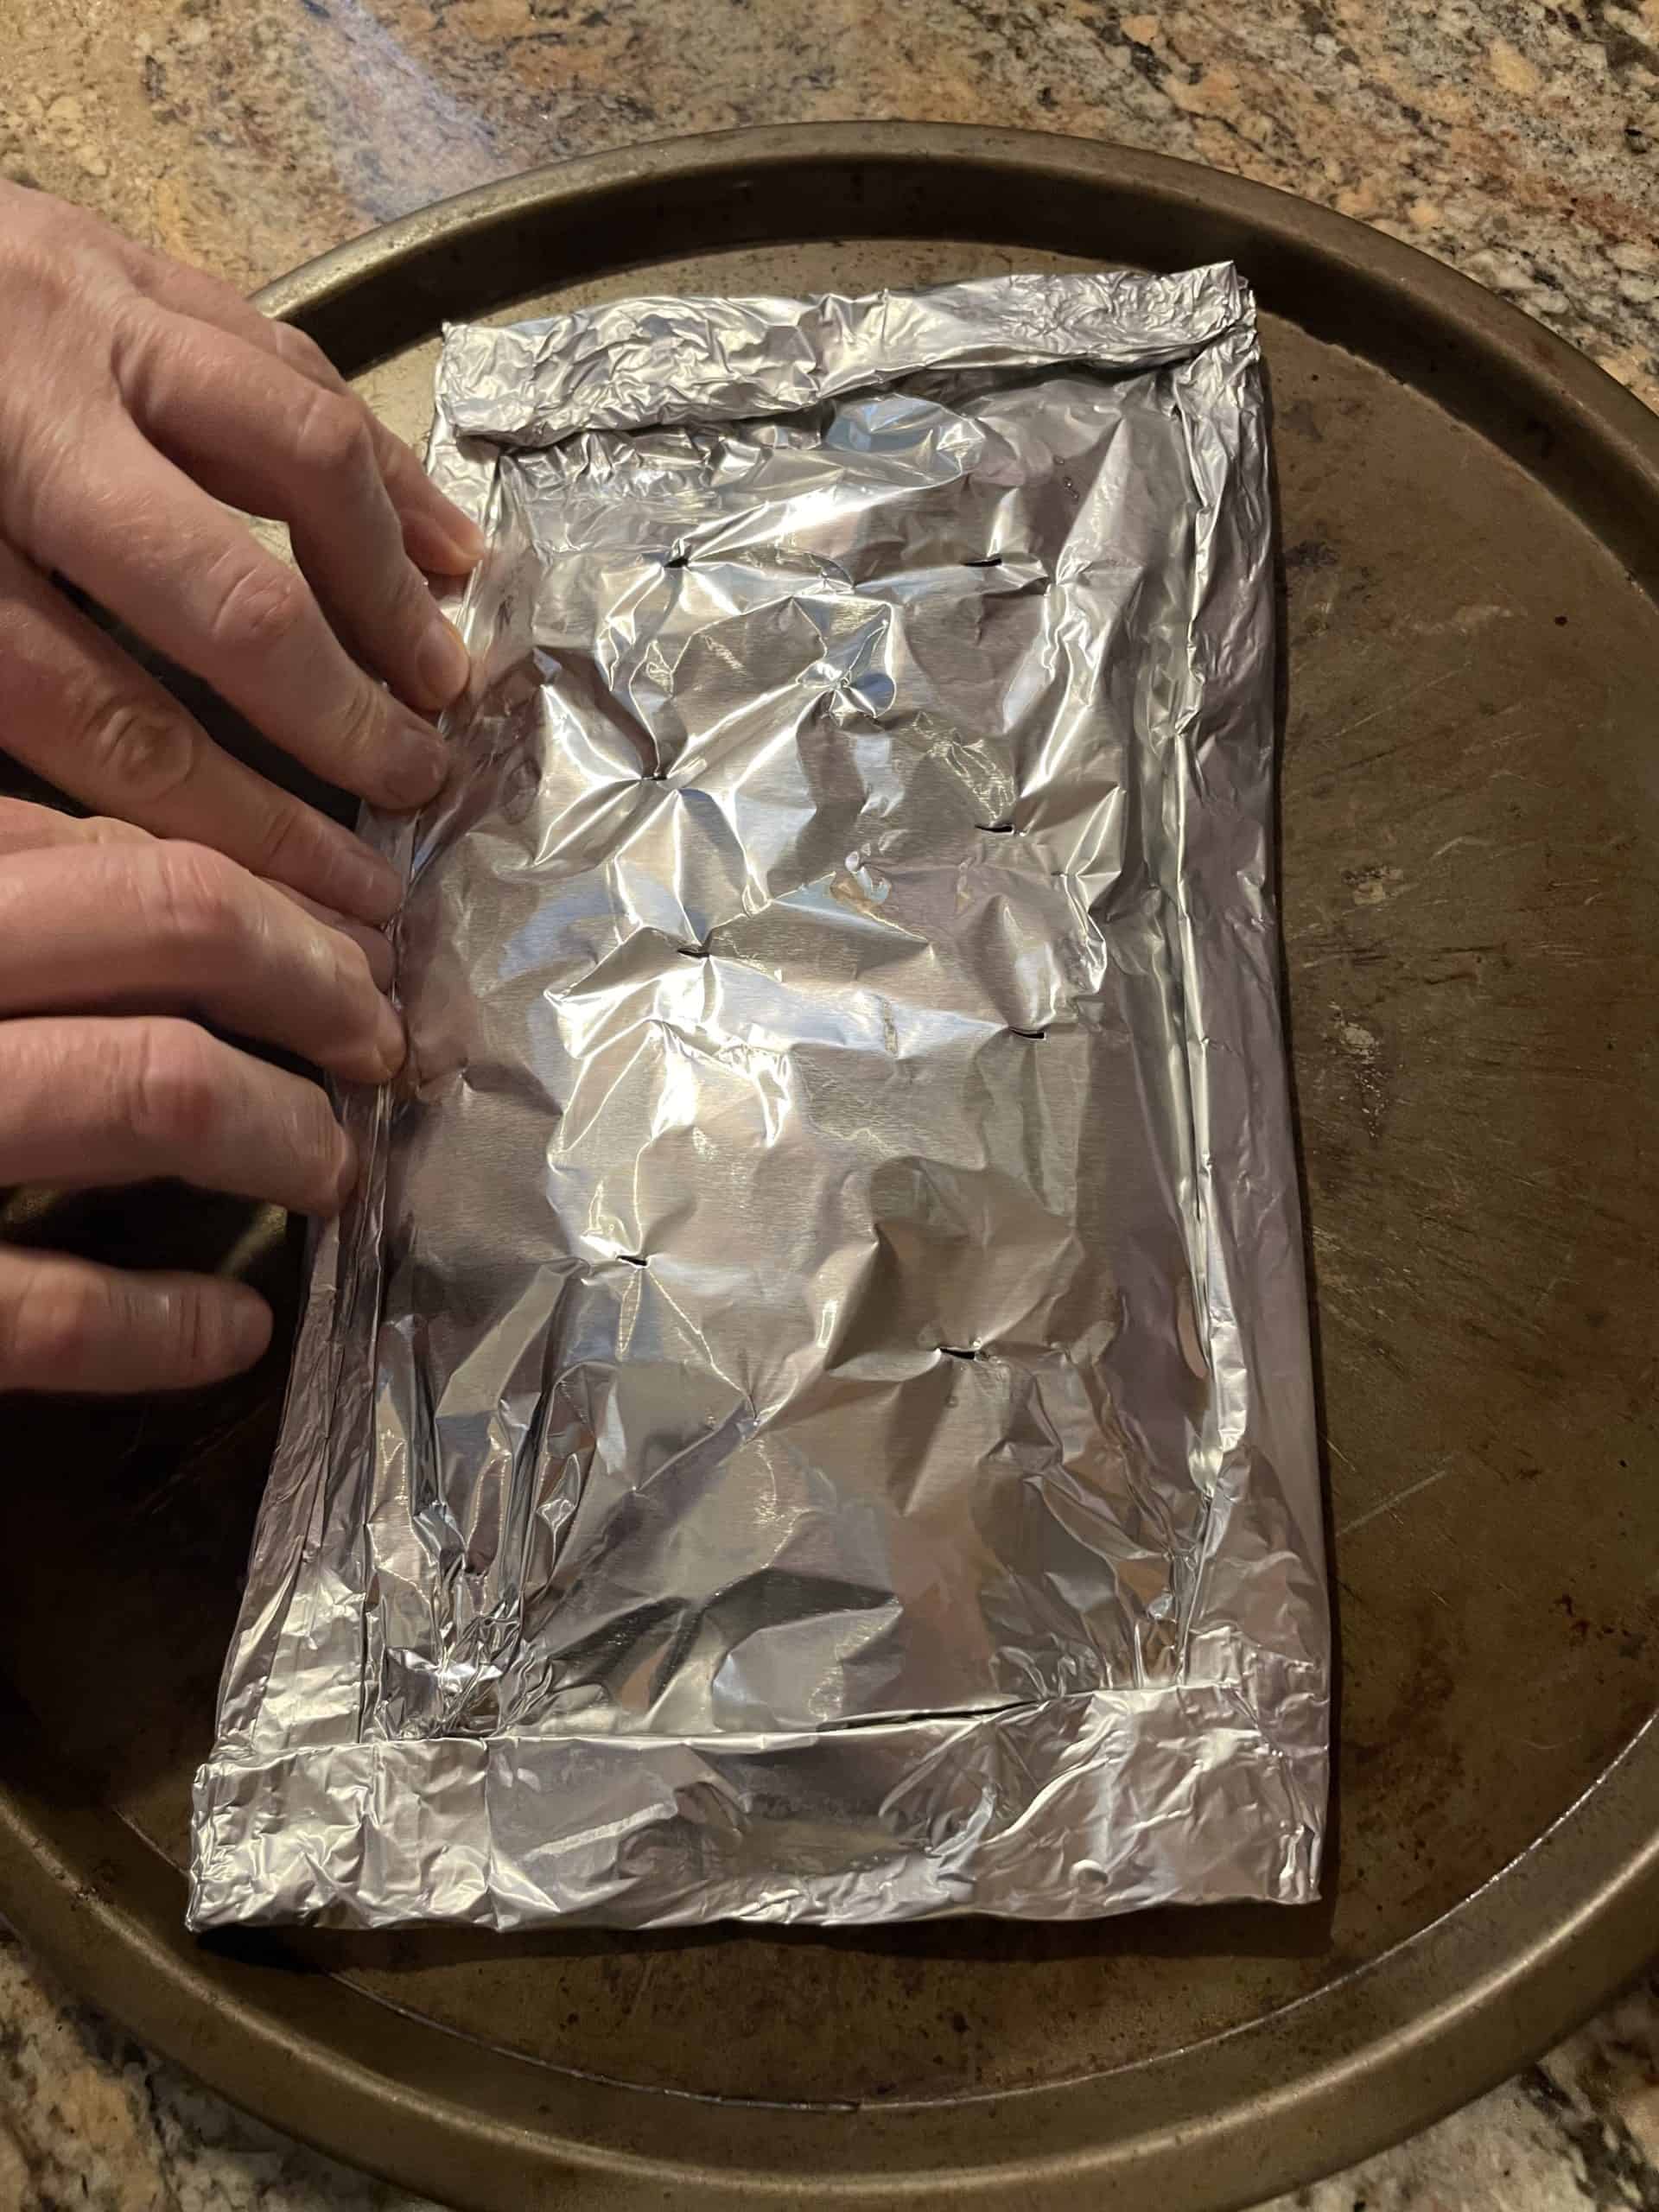 Wrap trout filets in a foil packet.